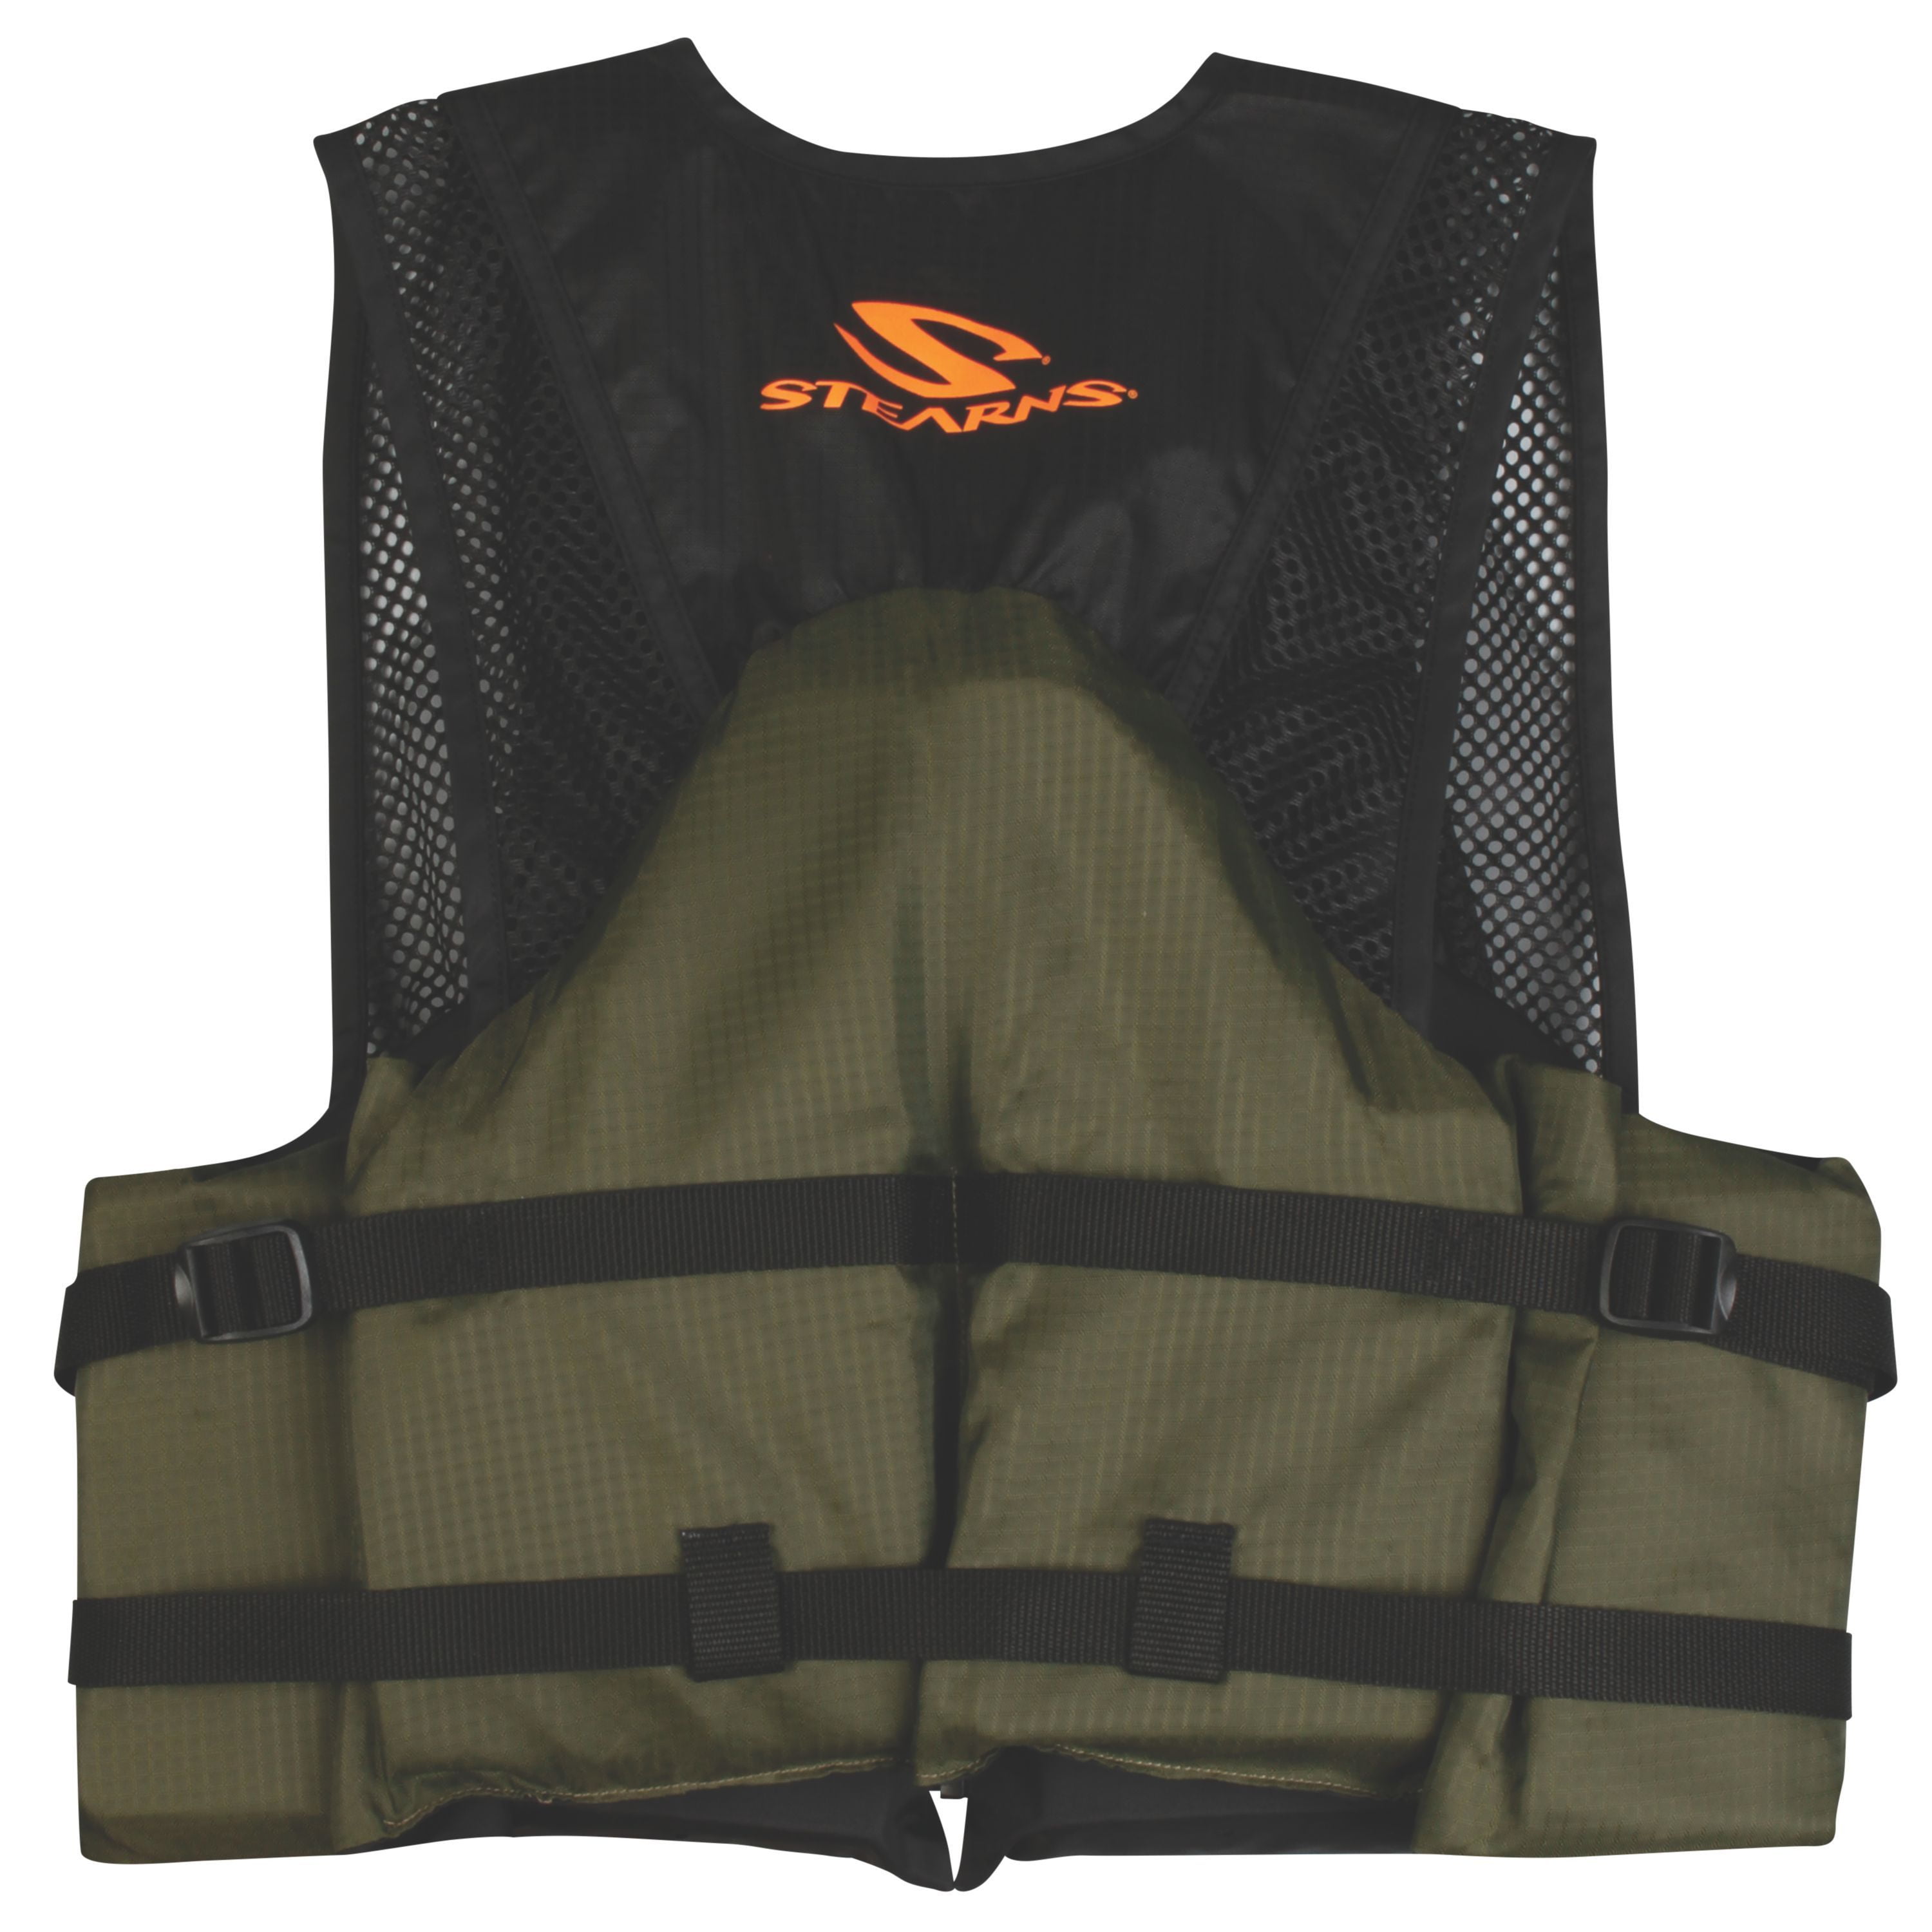 Stearns Comfort Fishing Life Vest 